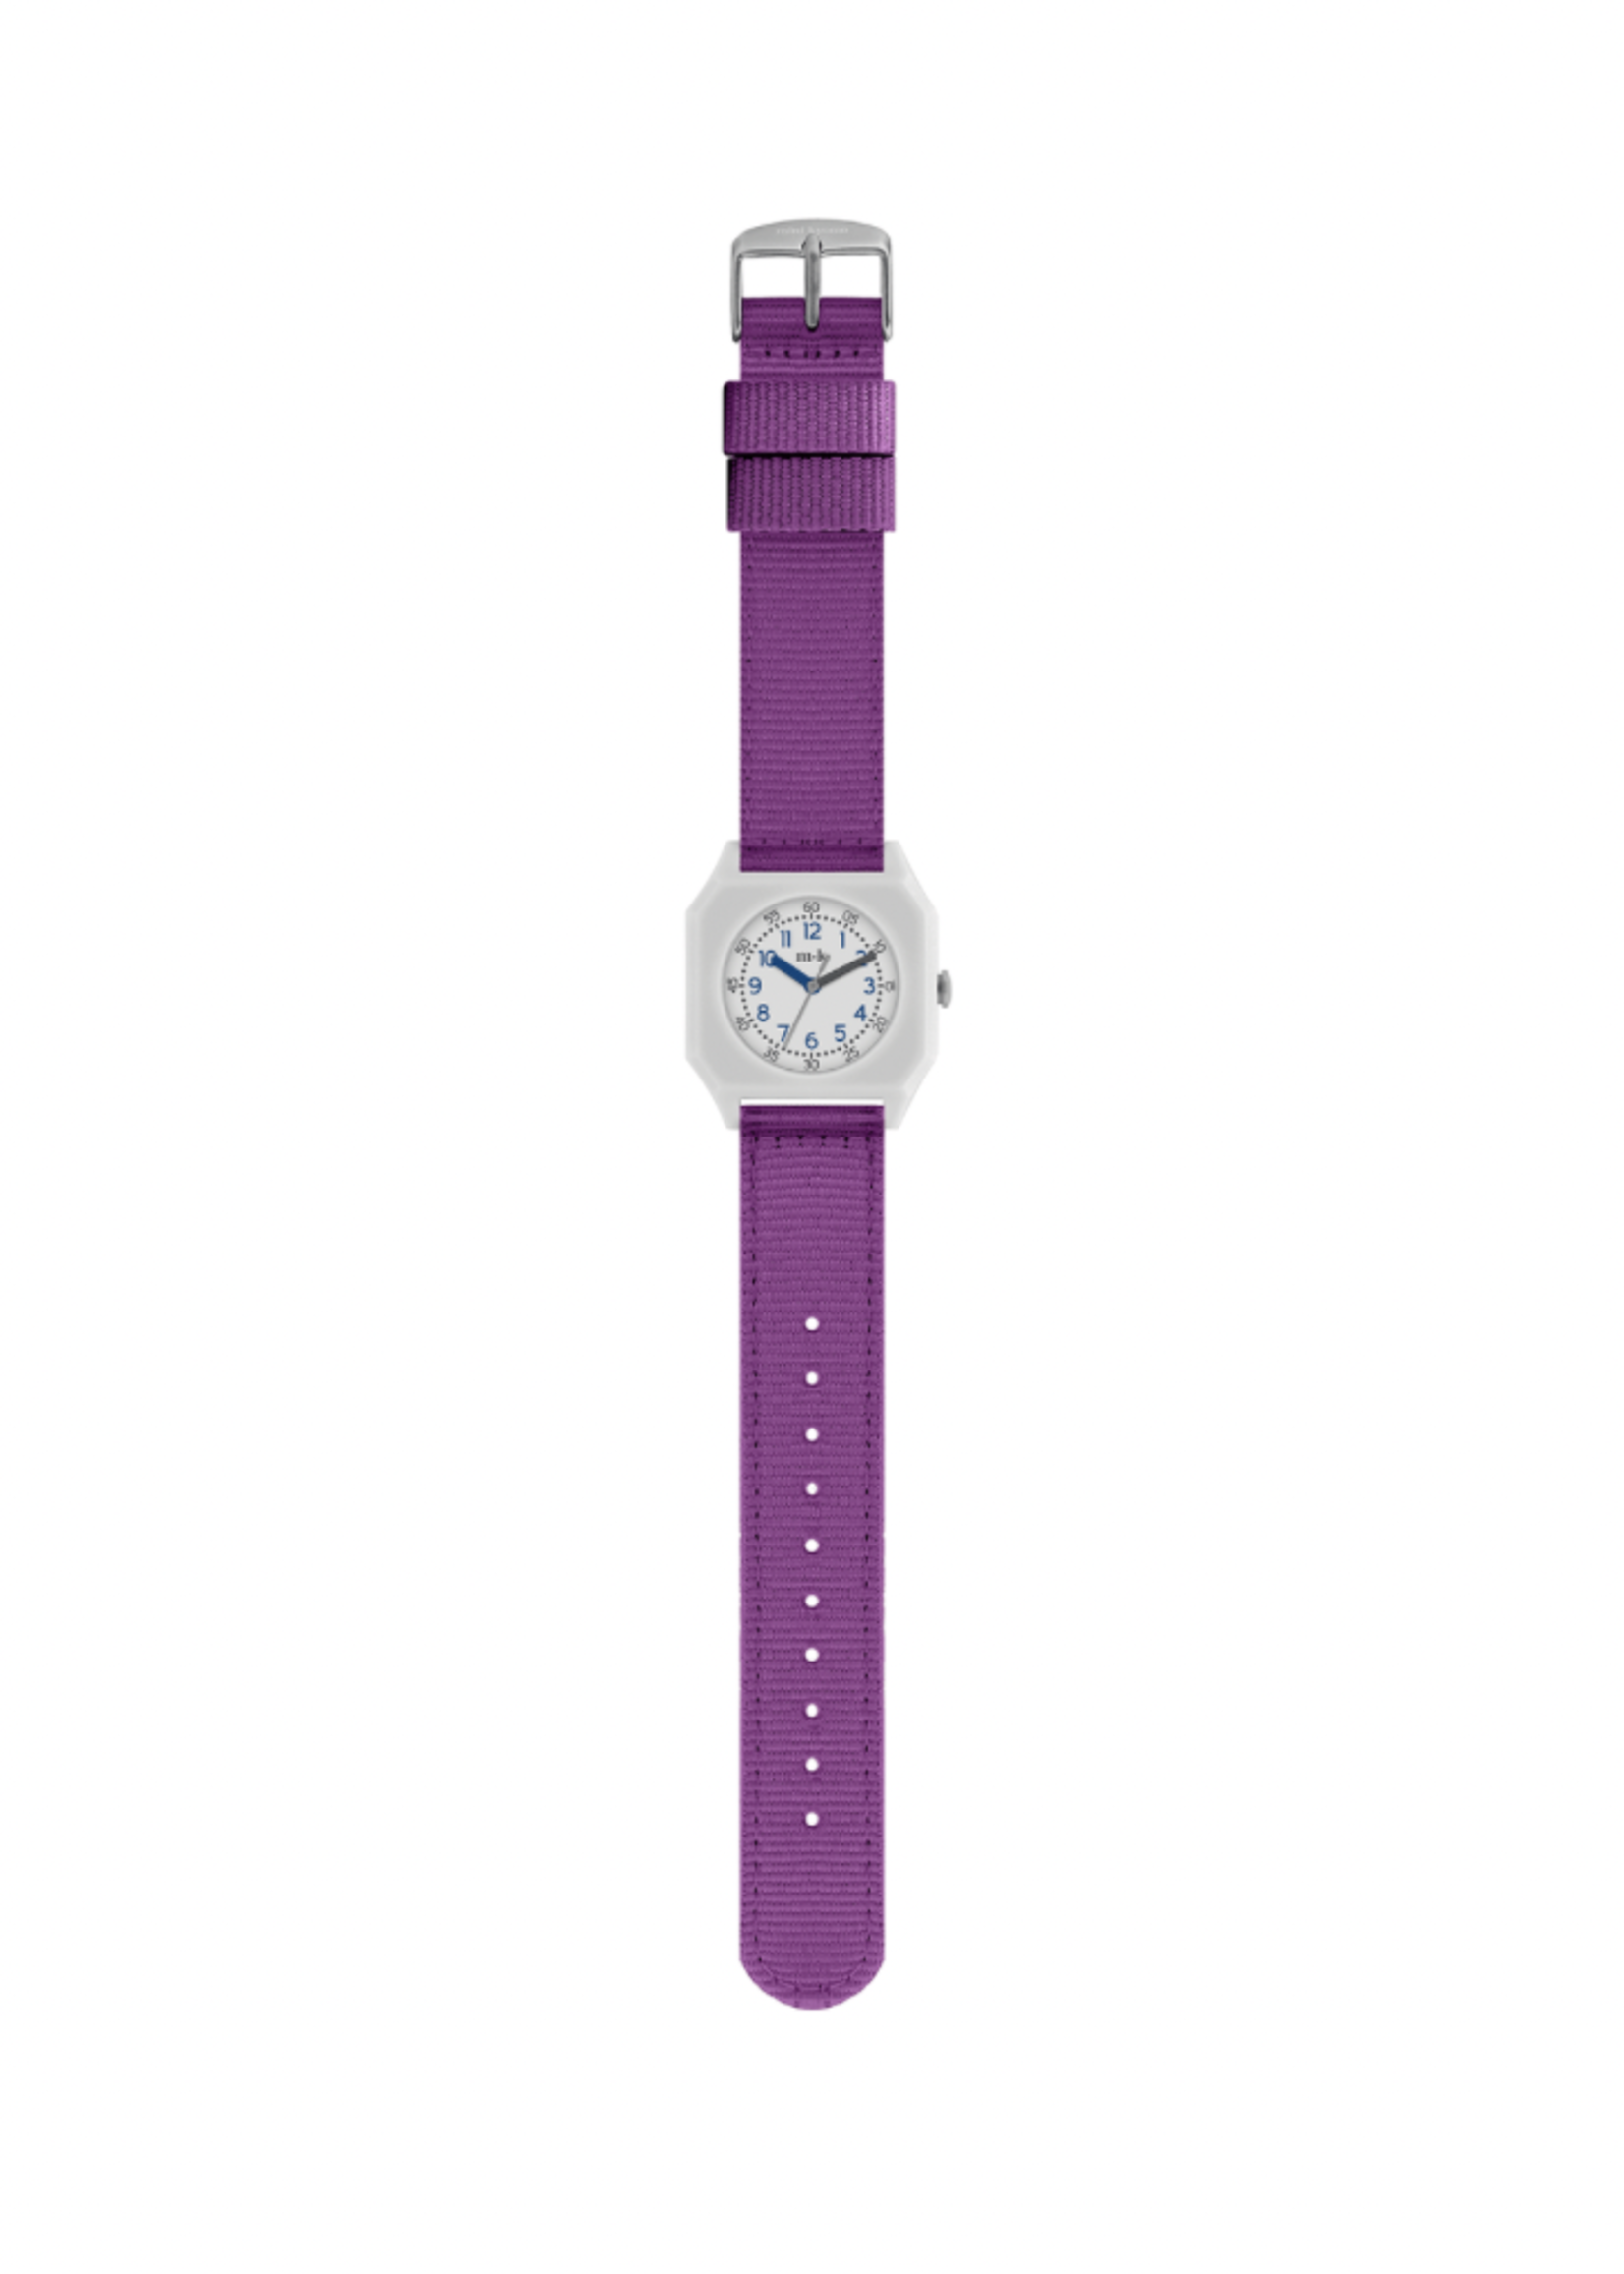 Mini Kyomo Violet Watch